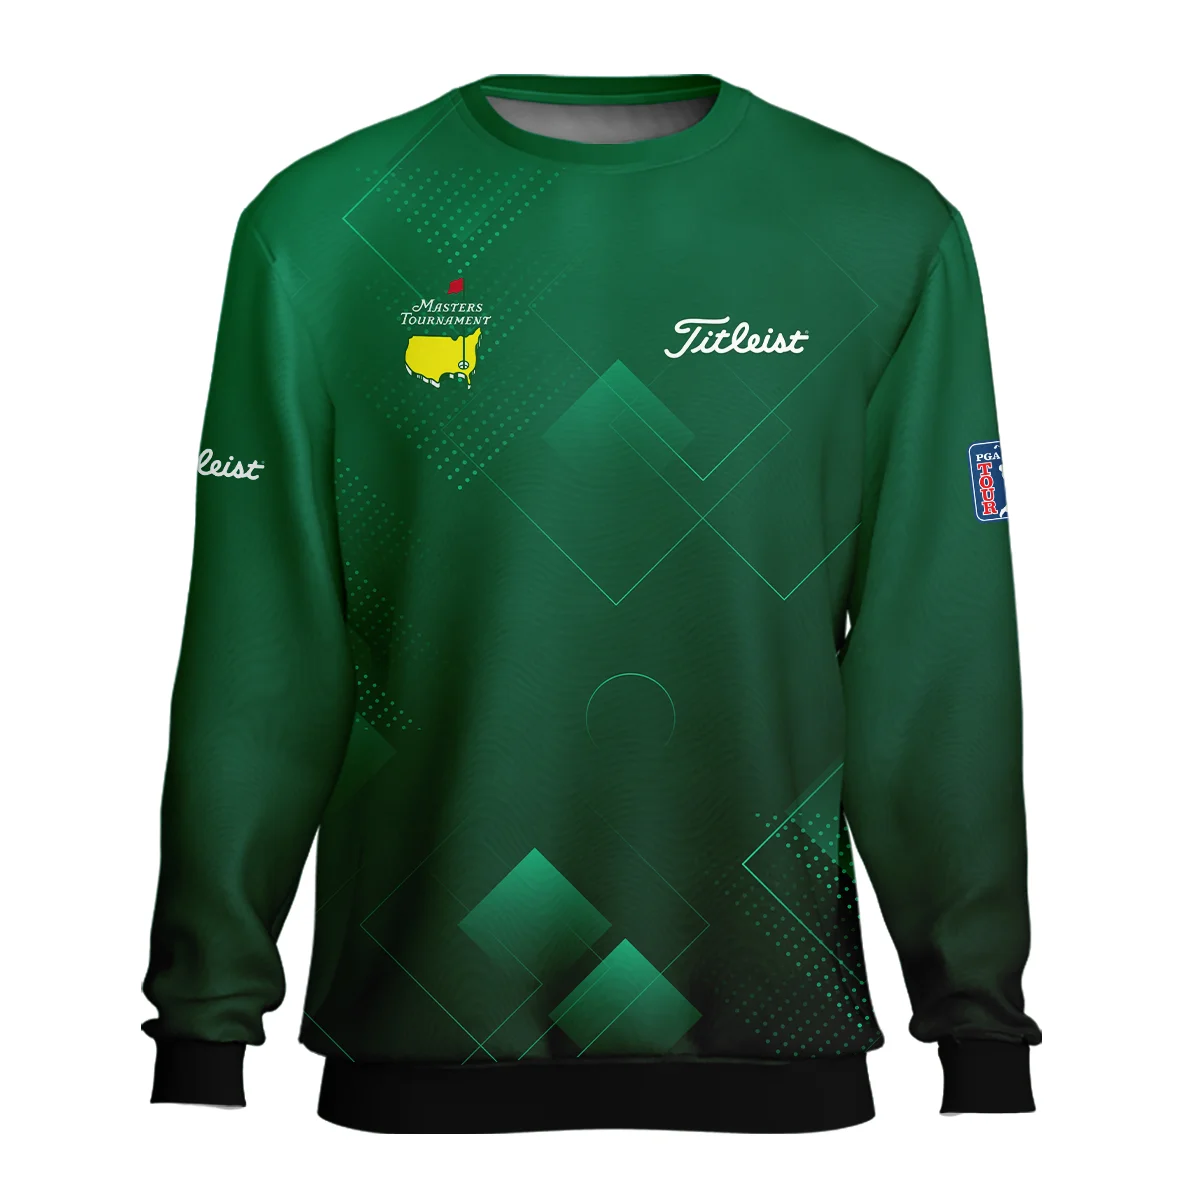 Masters Tournament Titleist Sleeveless Jacket Golf Sports Green Abstract Geometric Sleeveless Jacket